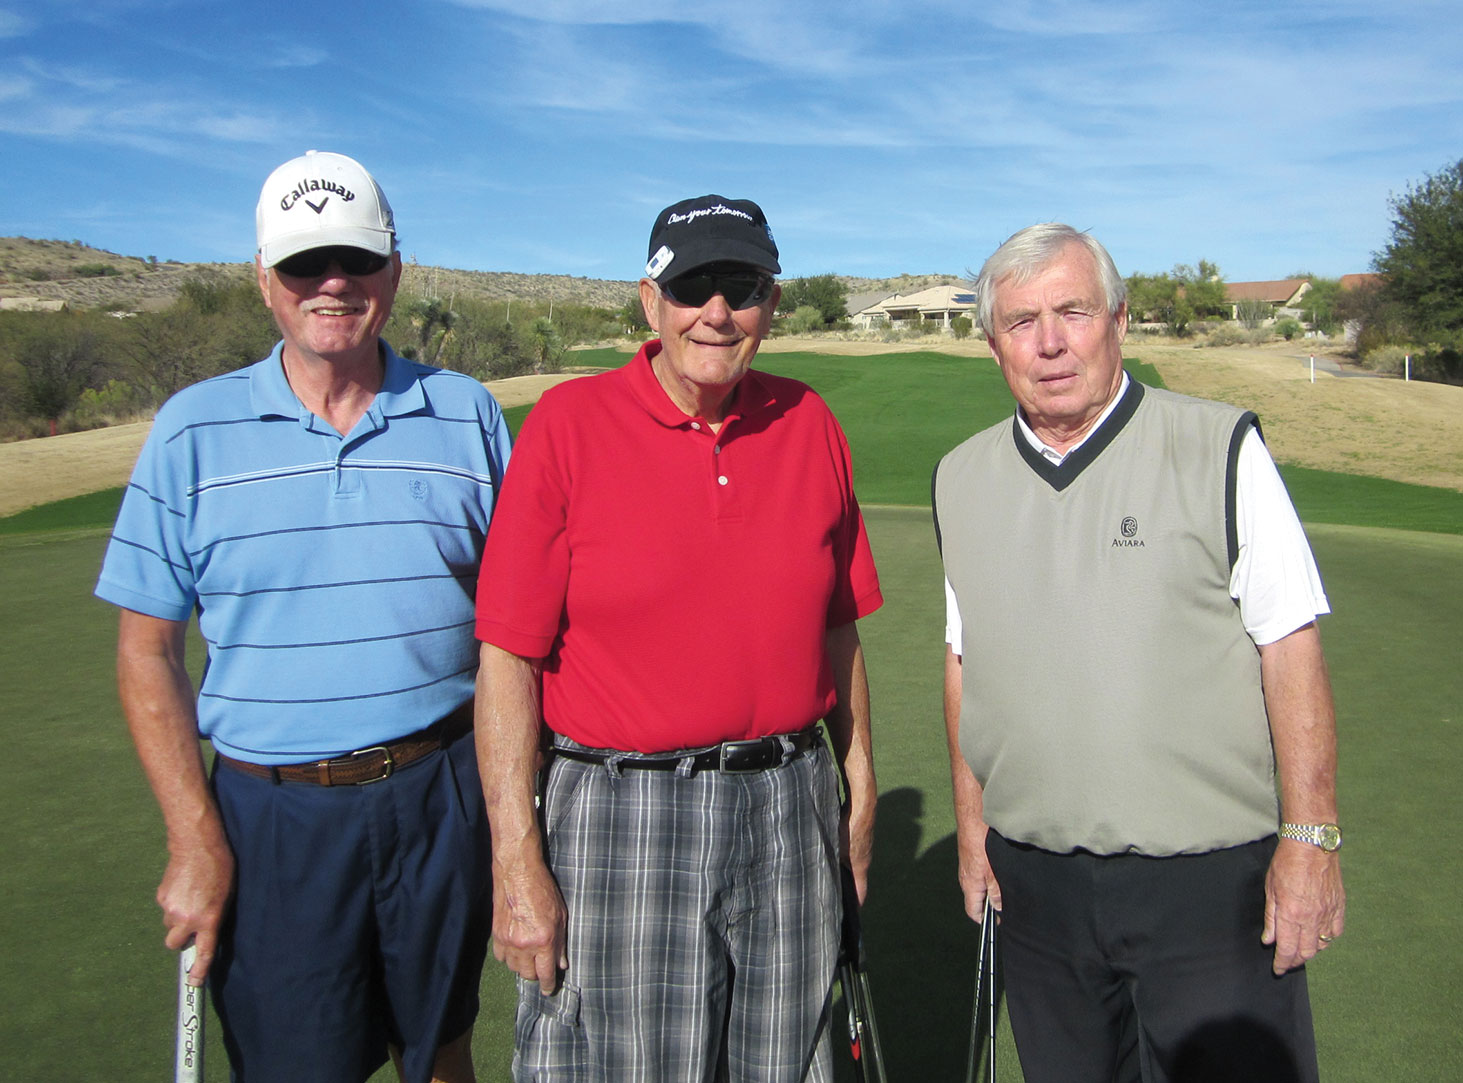 Dick Stehr, Steve Pomeroy and Tom McDonald